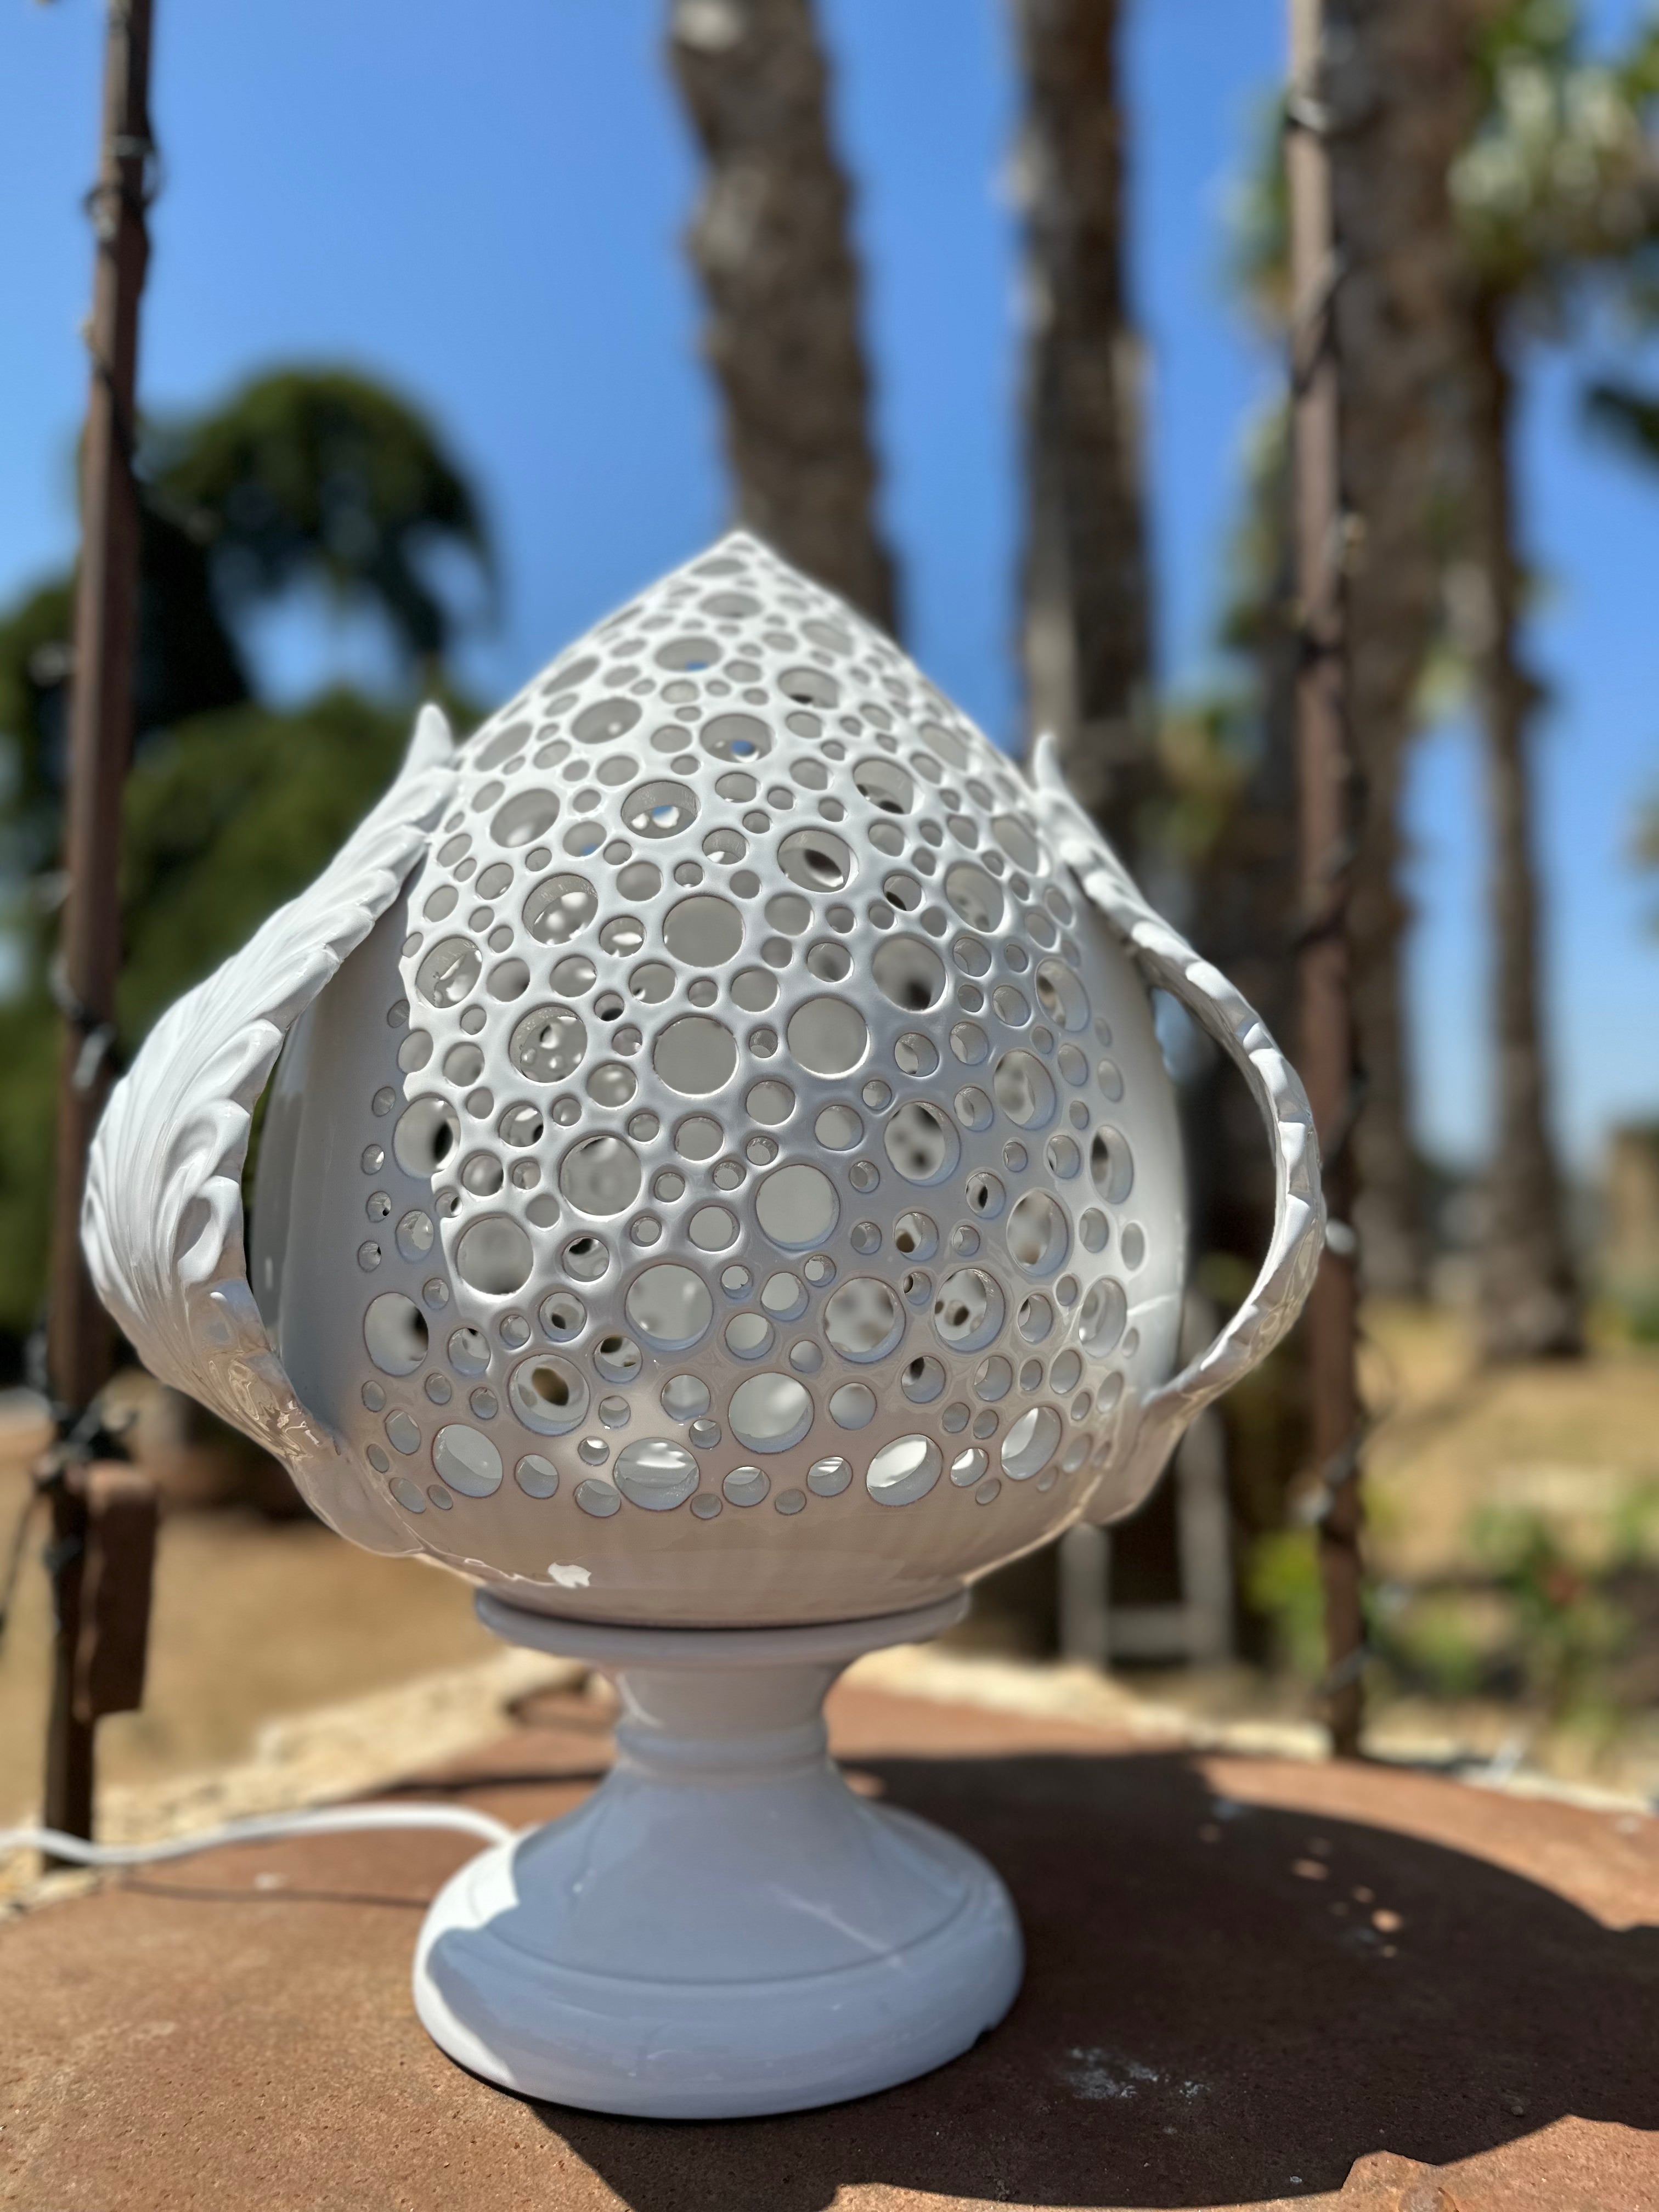 Lampada PUMO traforato in ceramica Pugliese – CRC Artigian Design